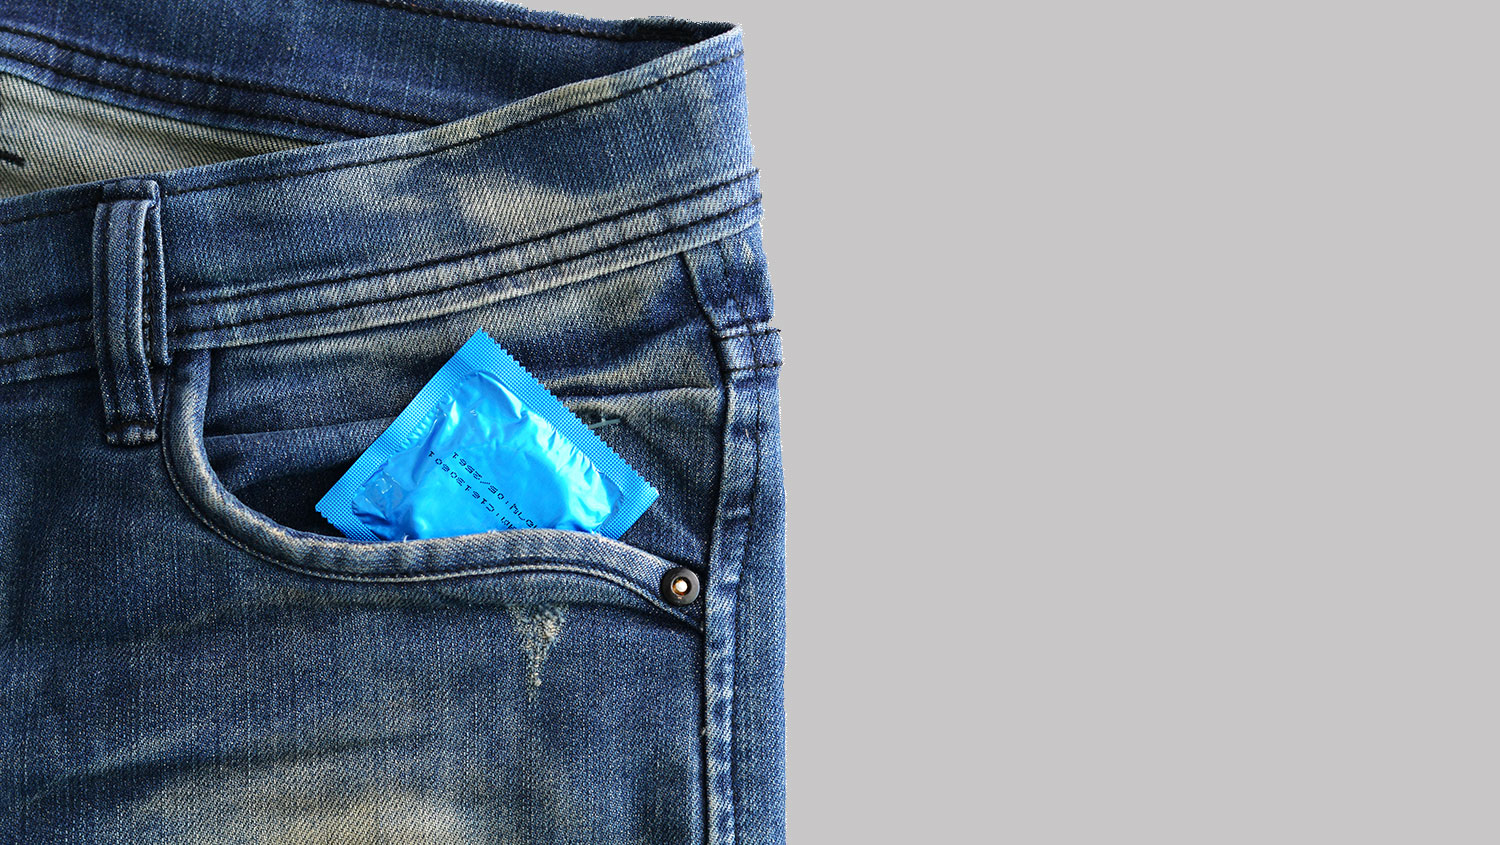 Condom in jeans pocket